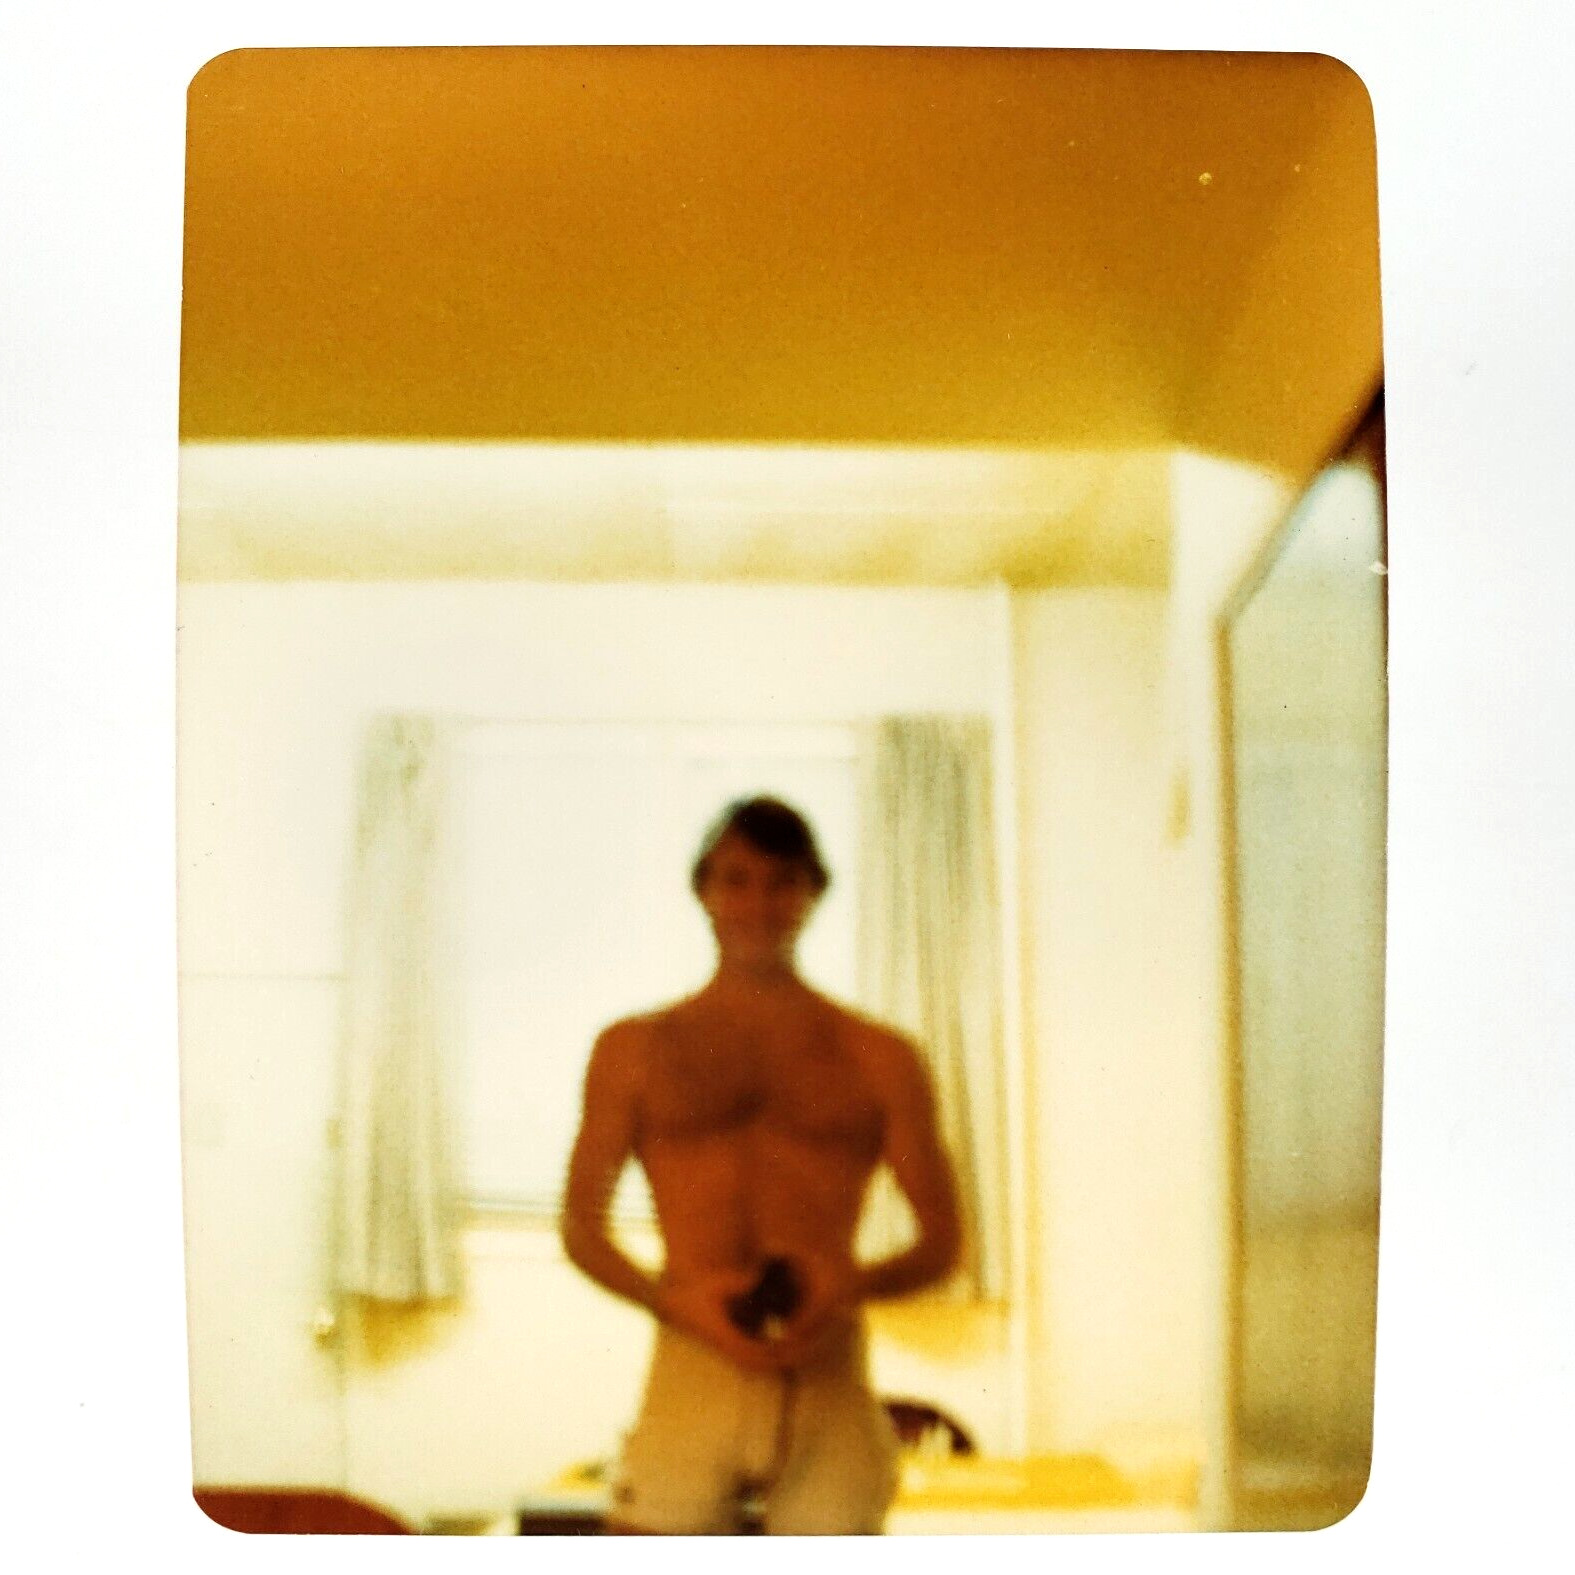 Shirtless Blurred Beefcake Photographer Photo 1970s Mirror Selfie Snapshot B3304